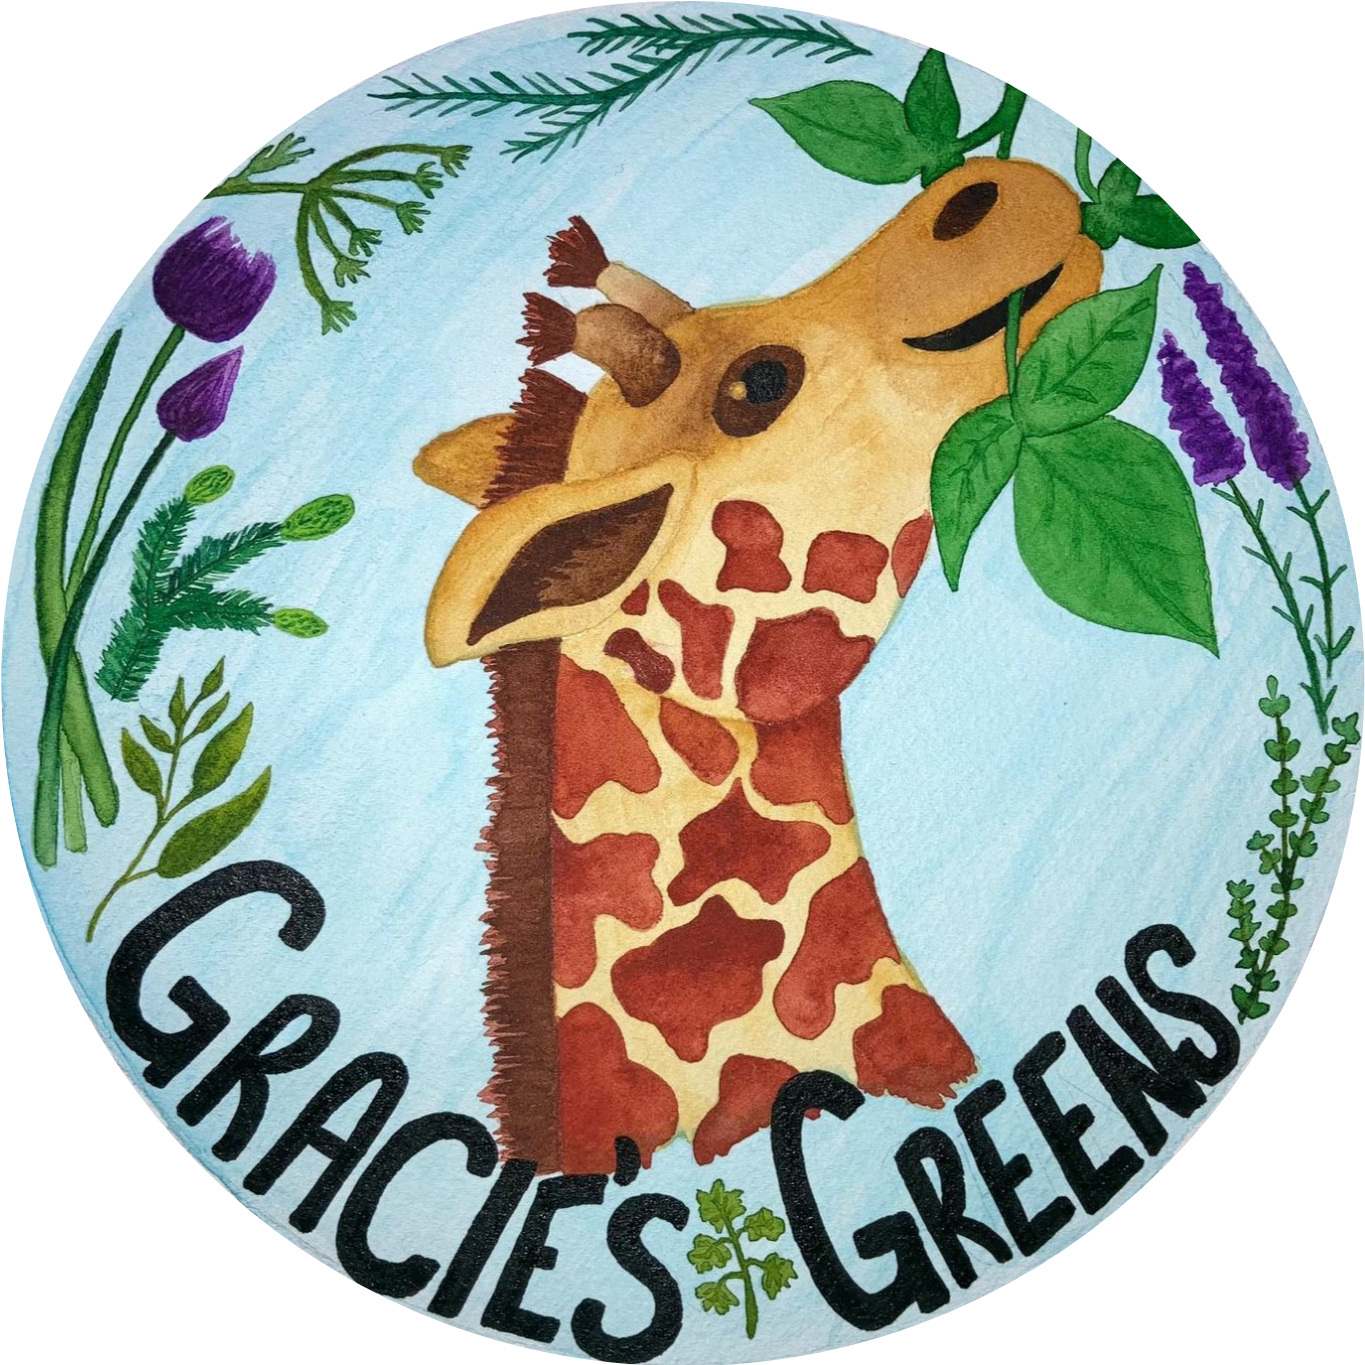 Gracie's Greens